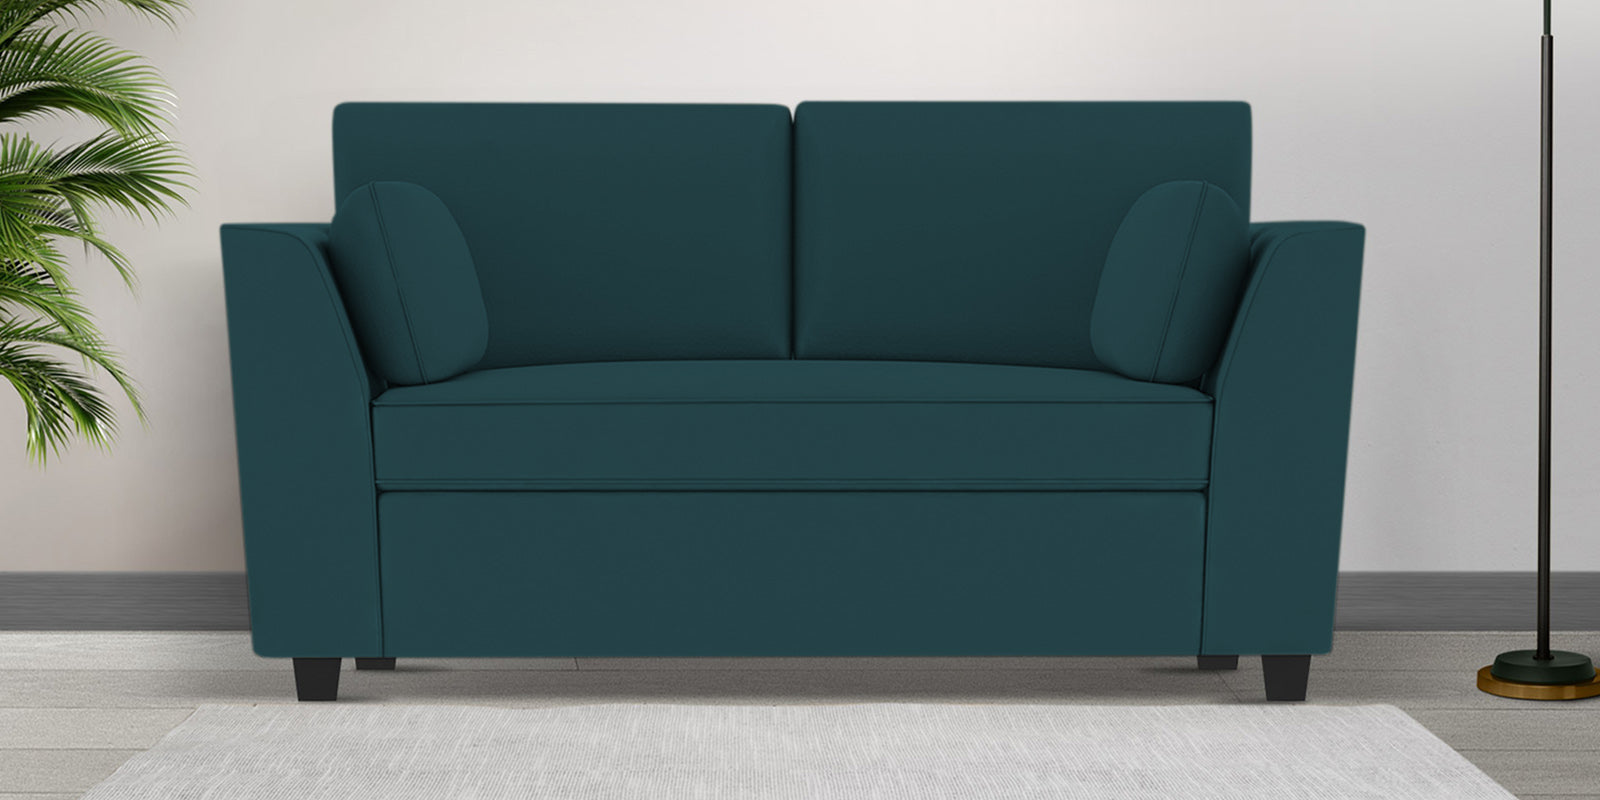 Bristo Velvet 2 Seater Sofa in Arabian Green Colour With Storage